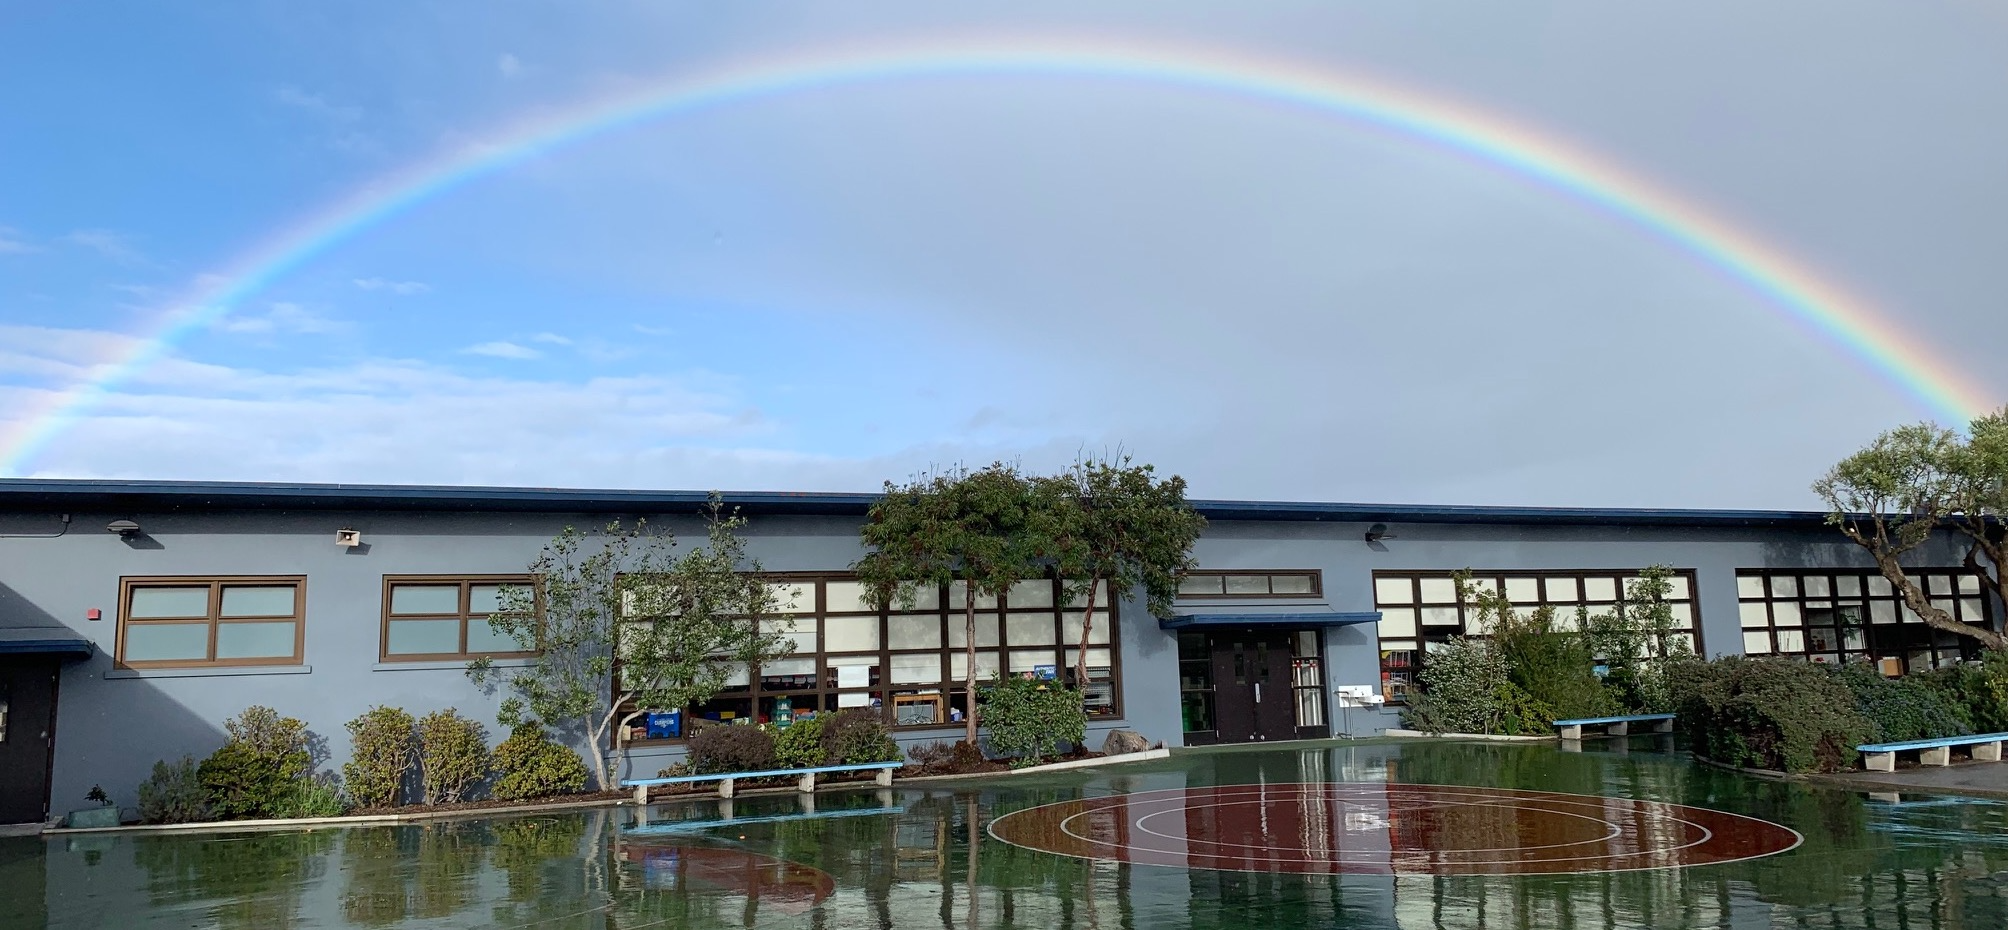 Sunset Elementary after rain, with a rainbow overhead